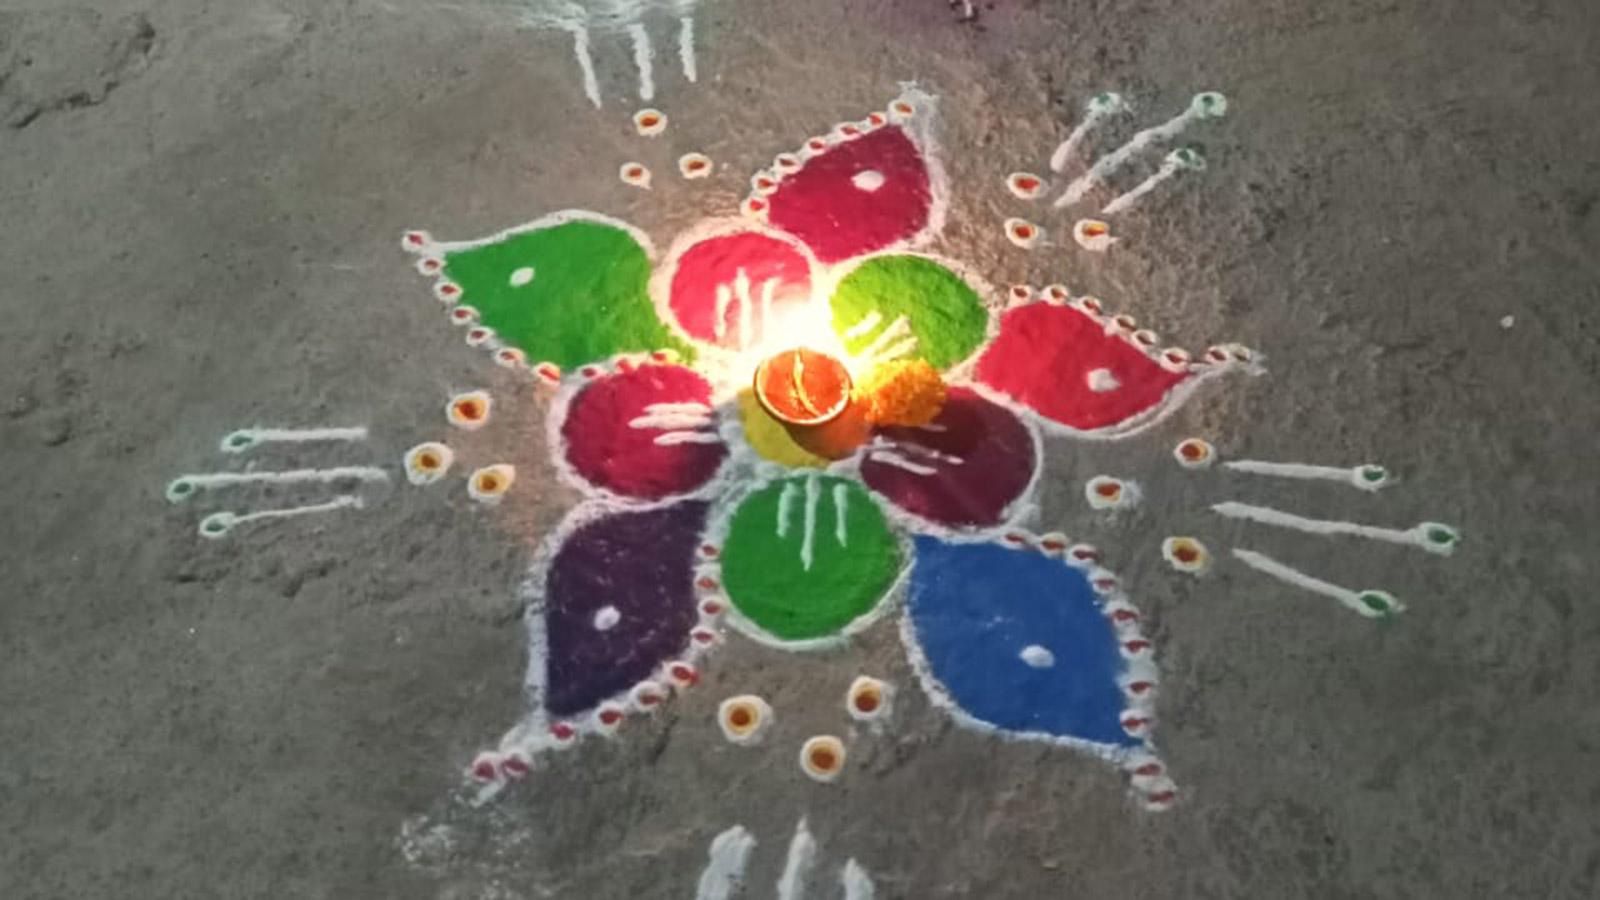 Rangoli design for Diwali in India